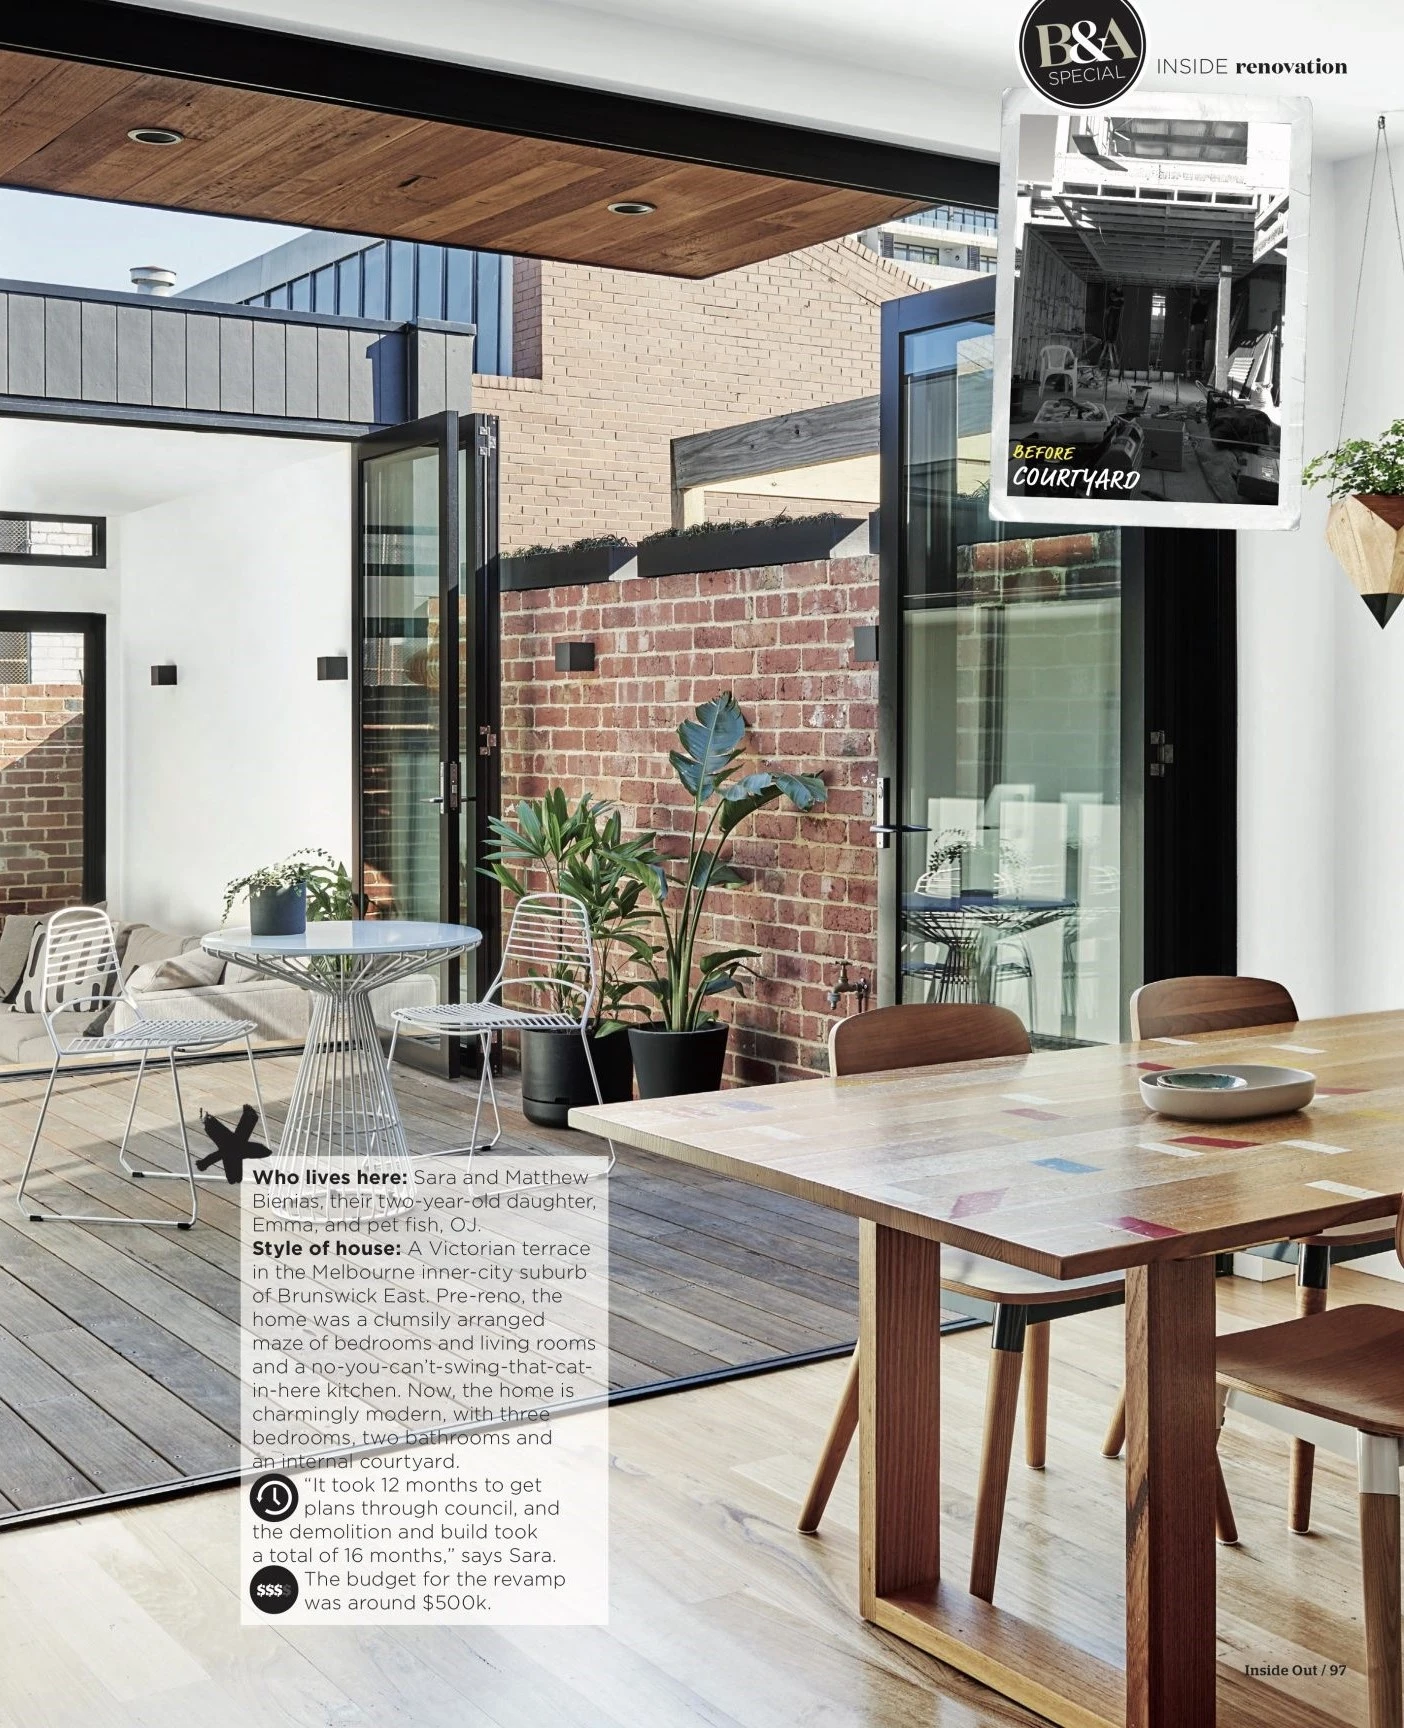 Inside Out Magazine article for Jasmine McClelland Design's Kitchen Renovation